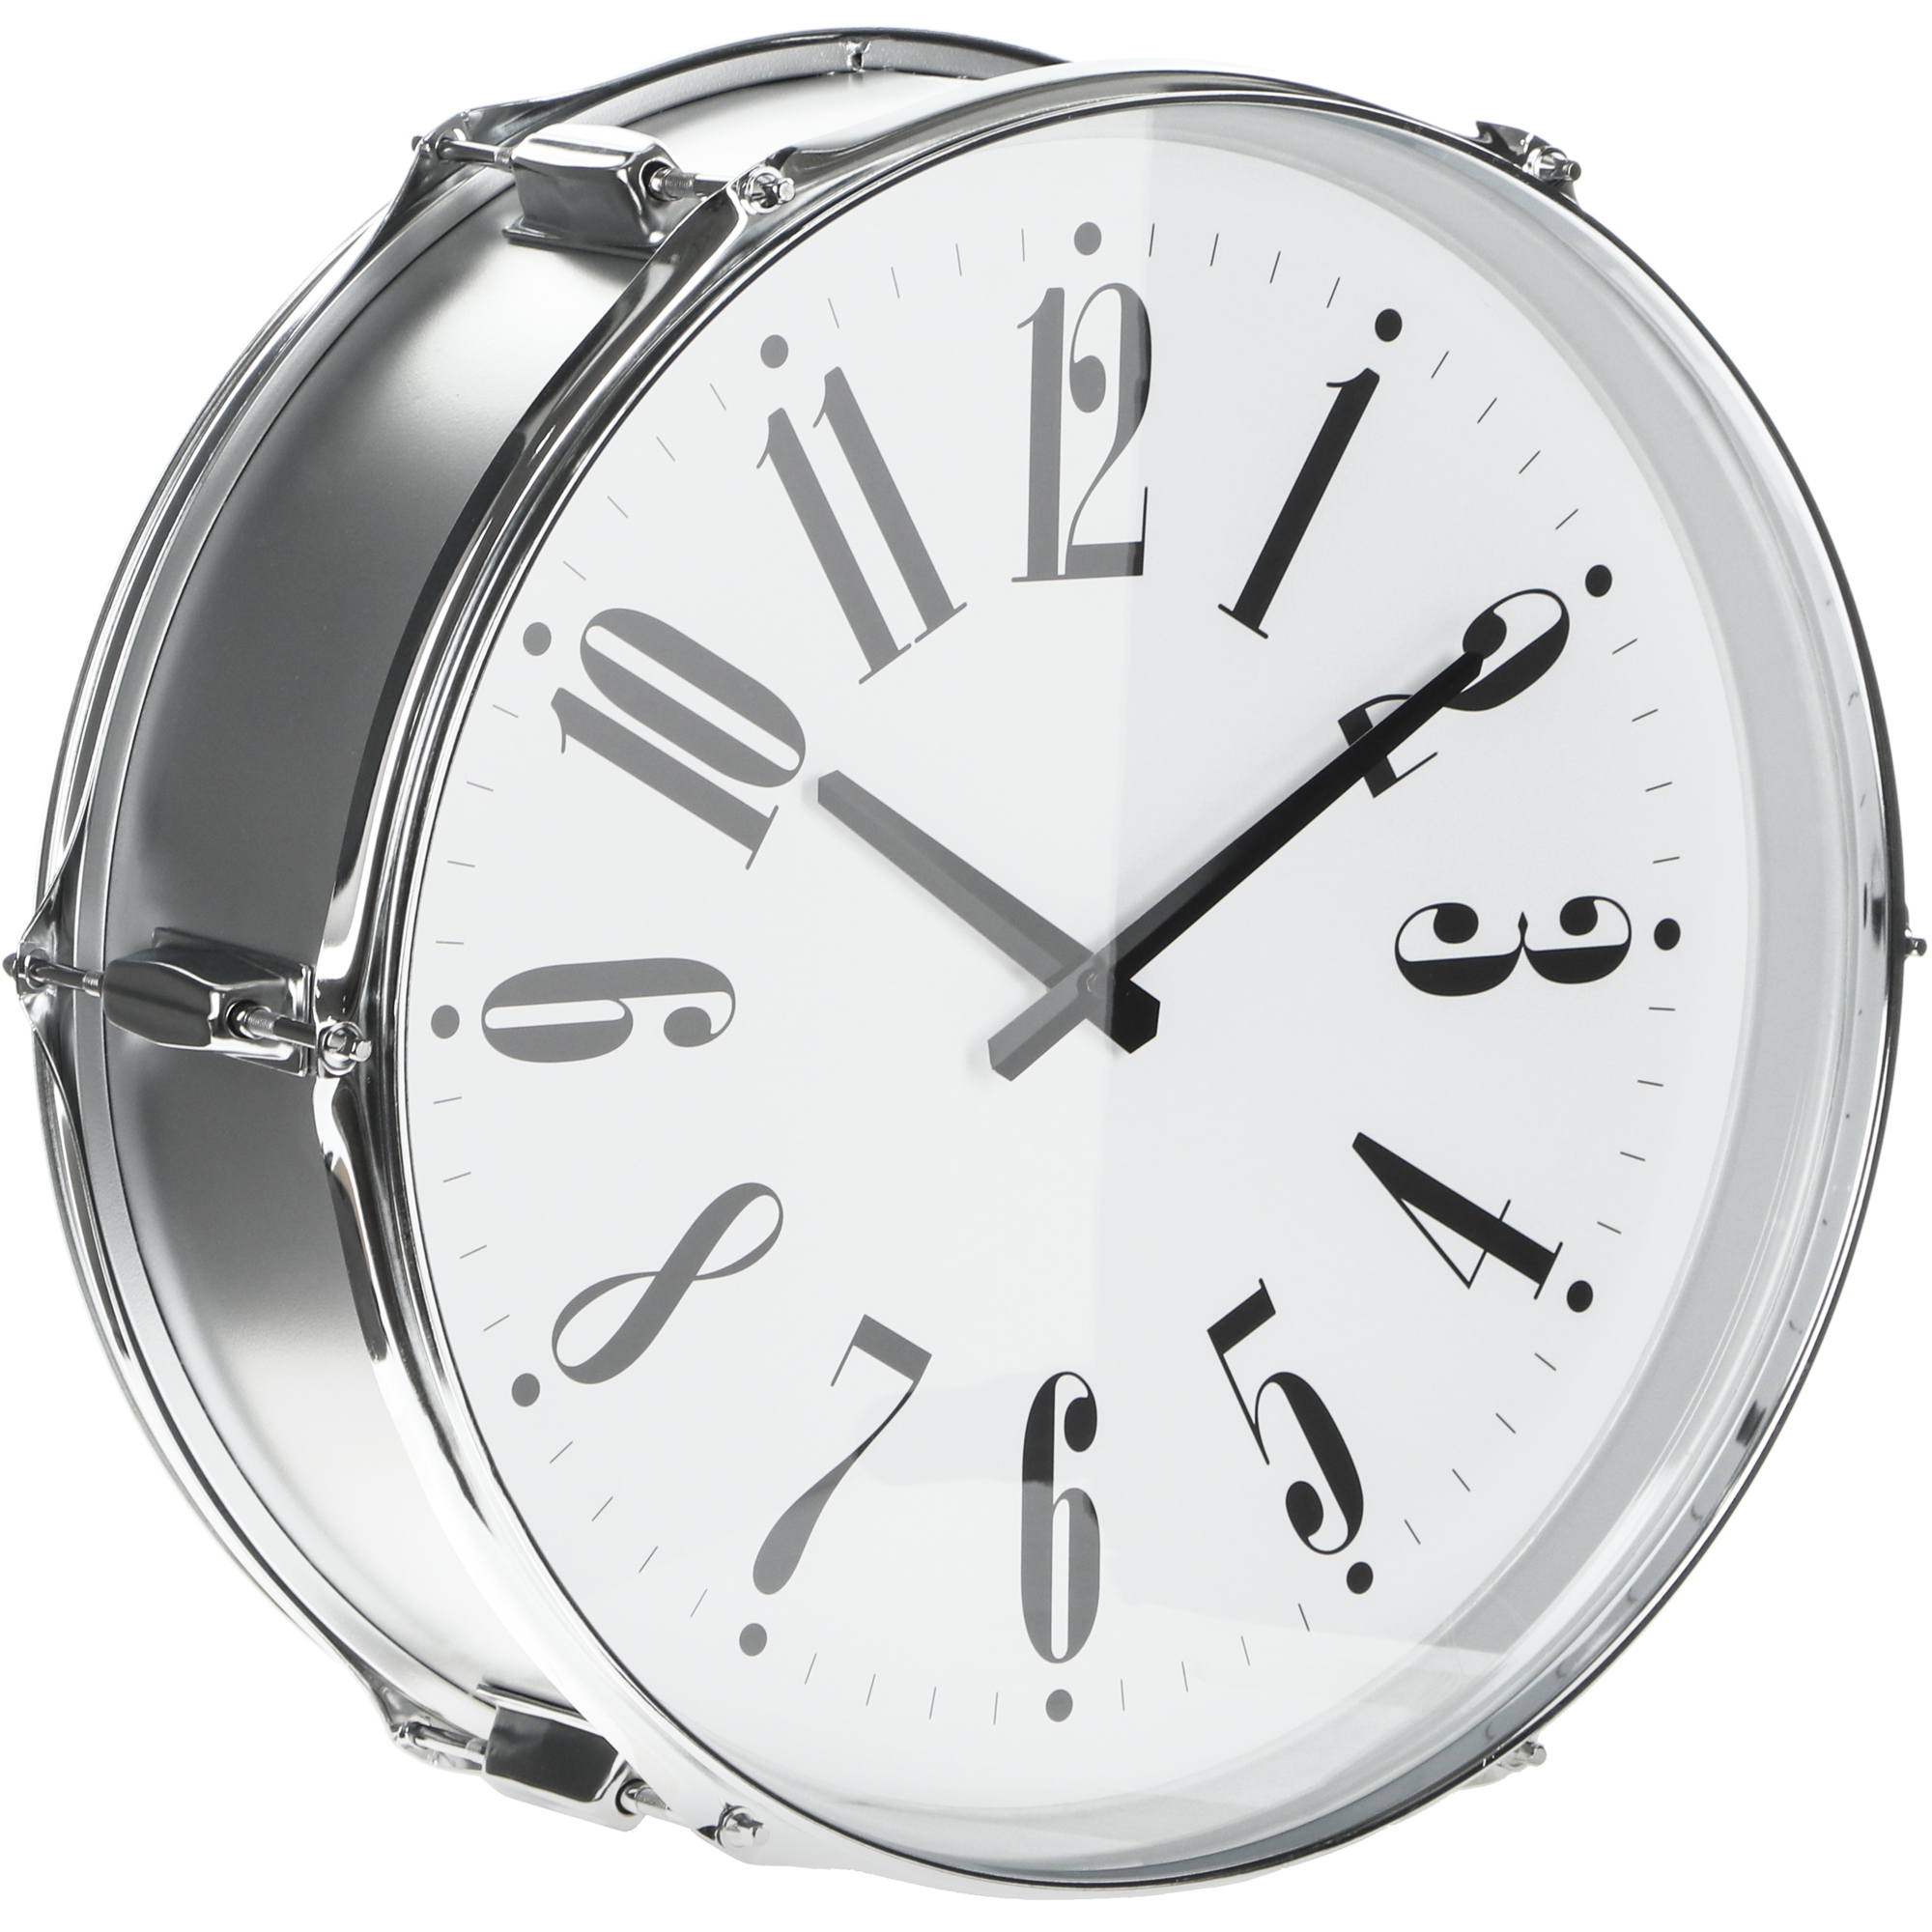 Часы настенные IsTime Drum серебряные 44,5х17,3х43,5 см часы электронные настольные будильник термометр с проекцией зеленые цифры 19 2х6 5см